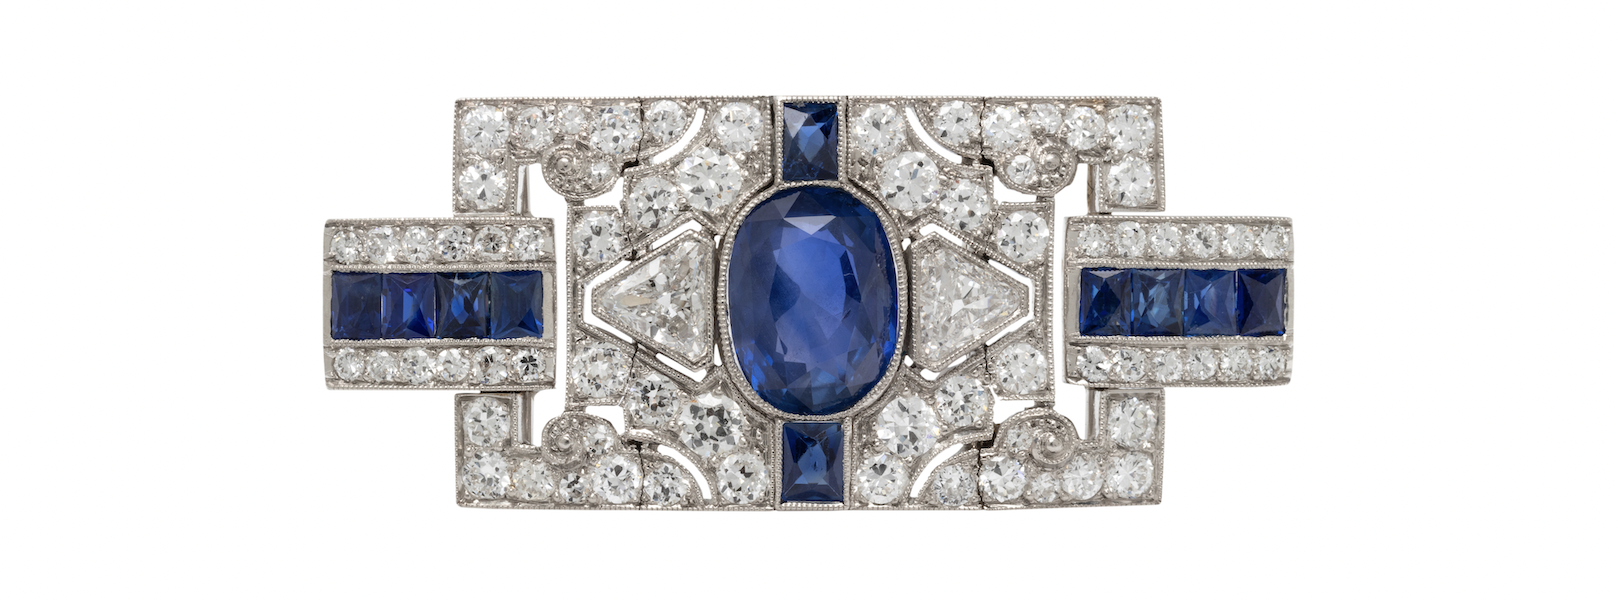 Unheated Burmese sapphire and diamond brooch, estimated at $15,000-$20,000